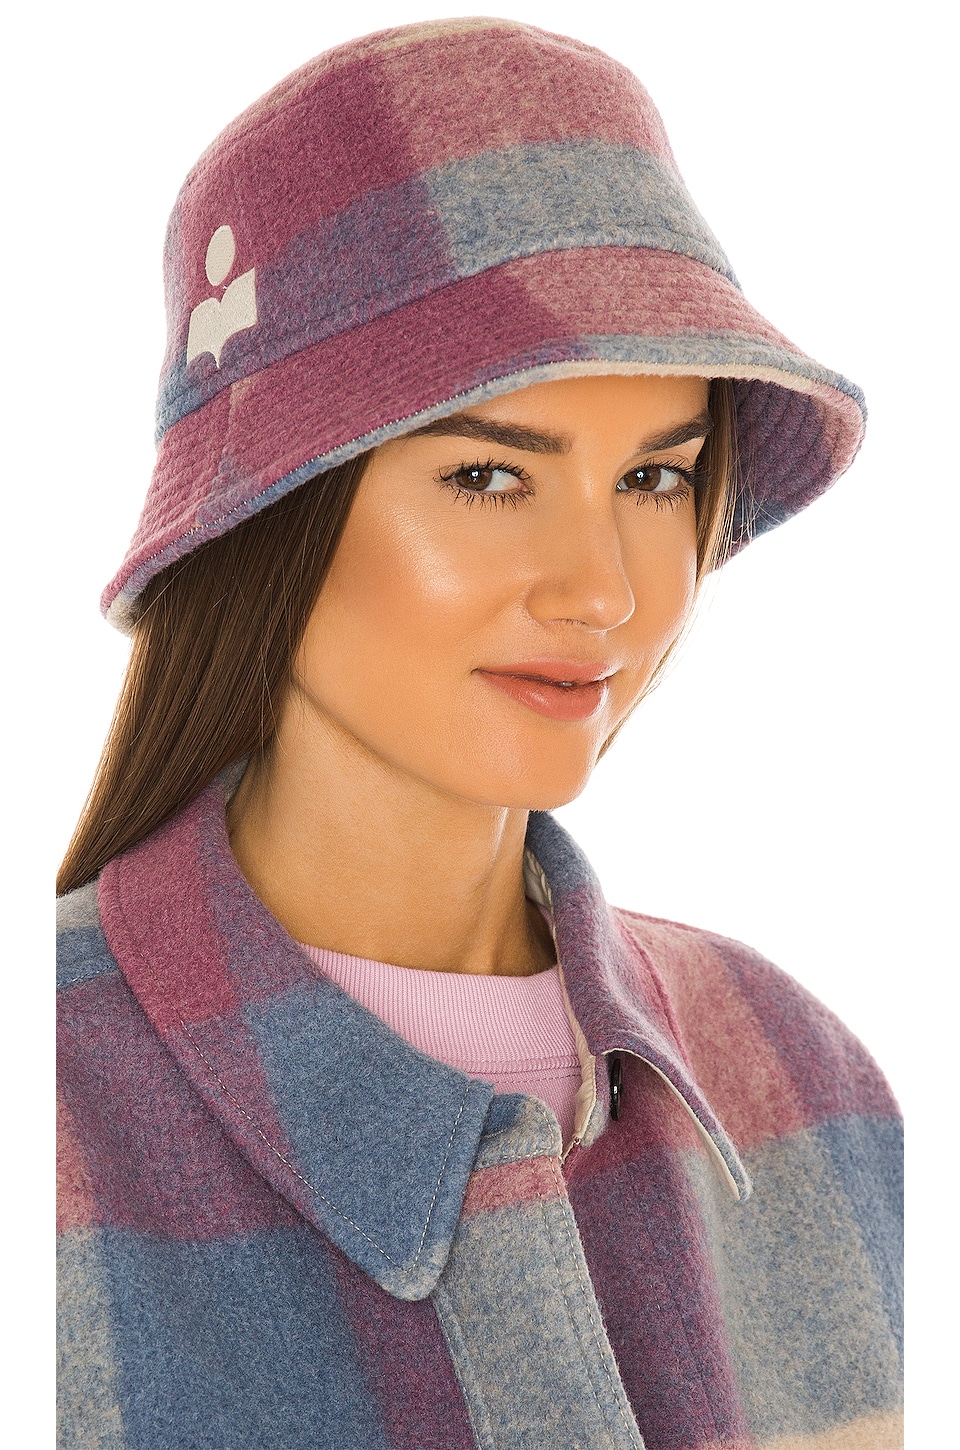 Isabel Marant Haley Bucket Hat in Rosewood | REVOLVE